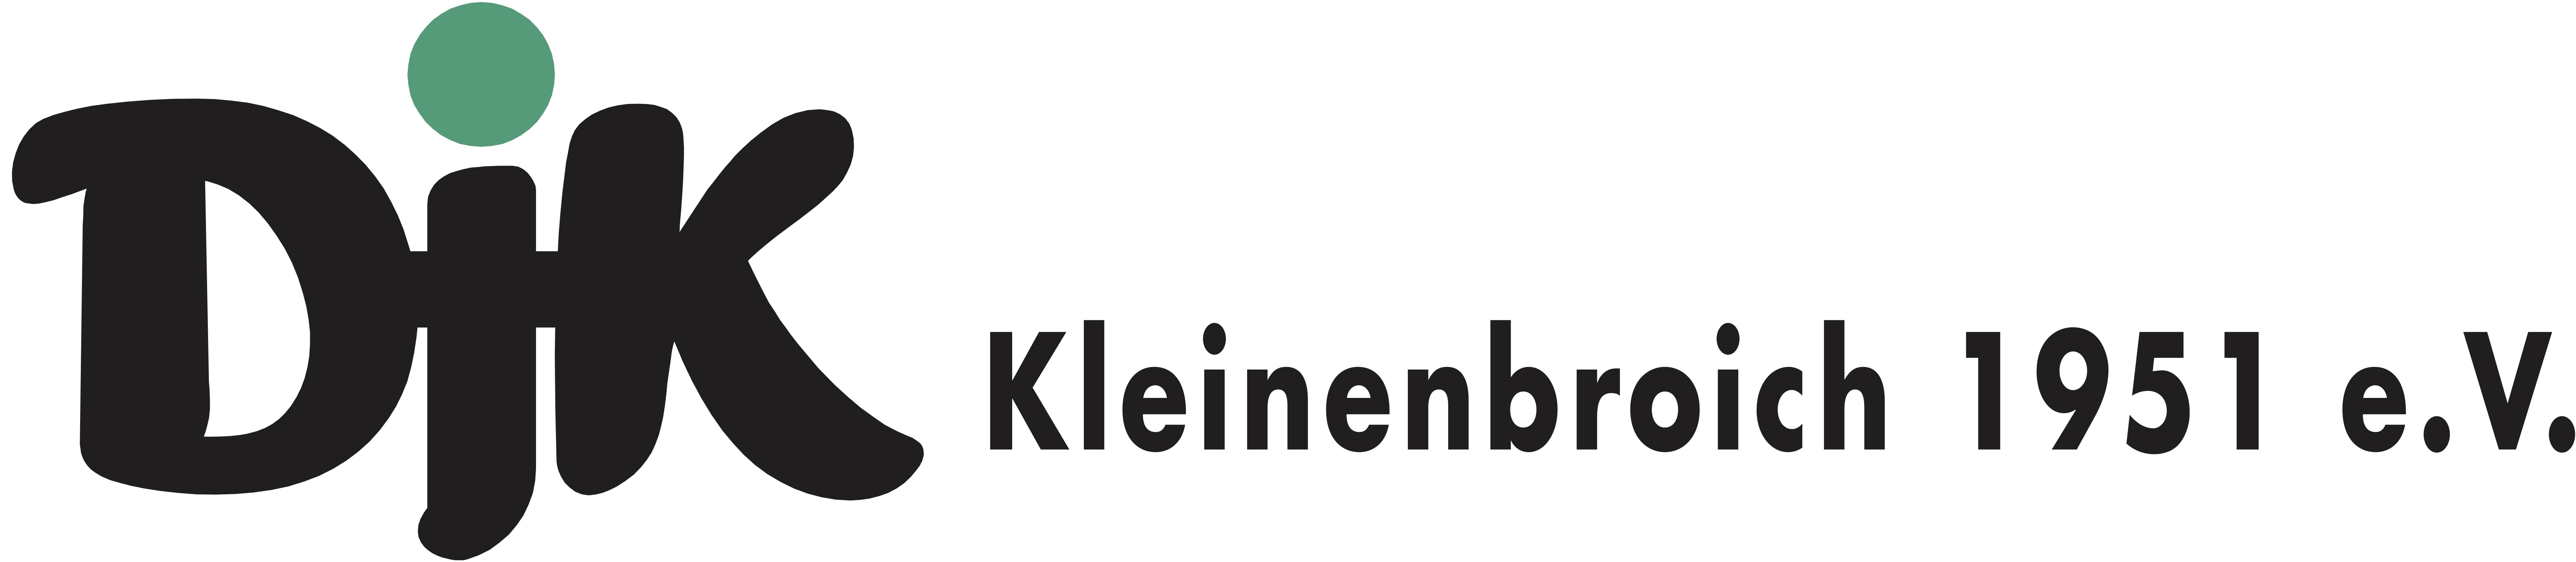 DJK Kleinenbroich Title Image